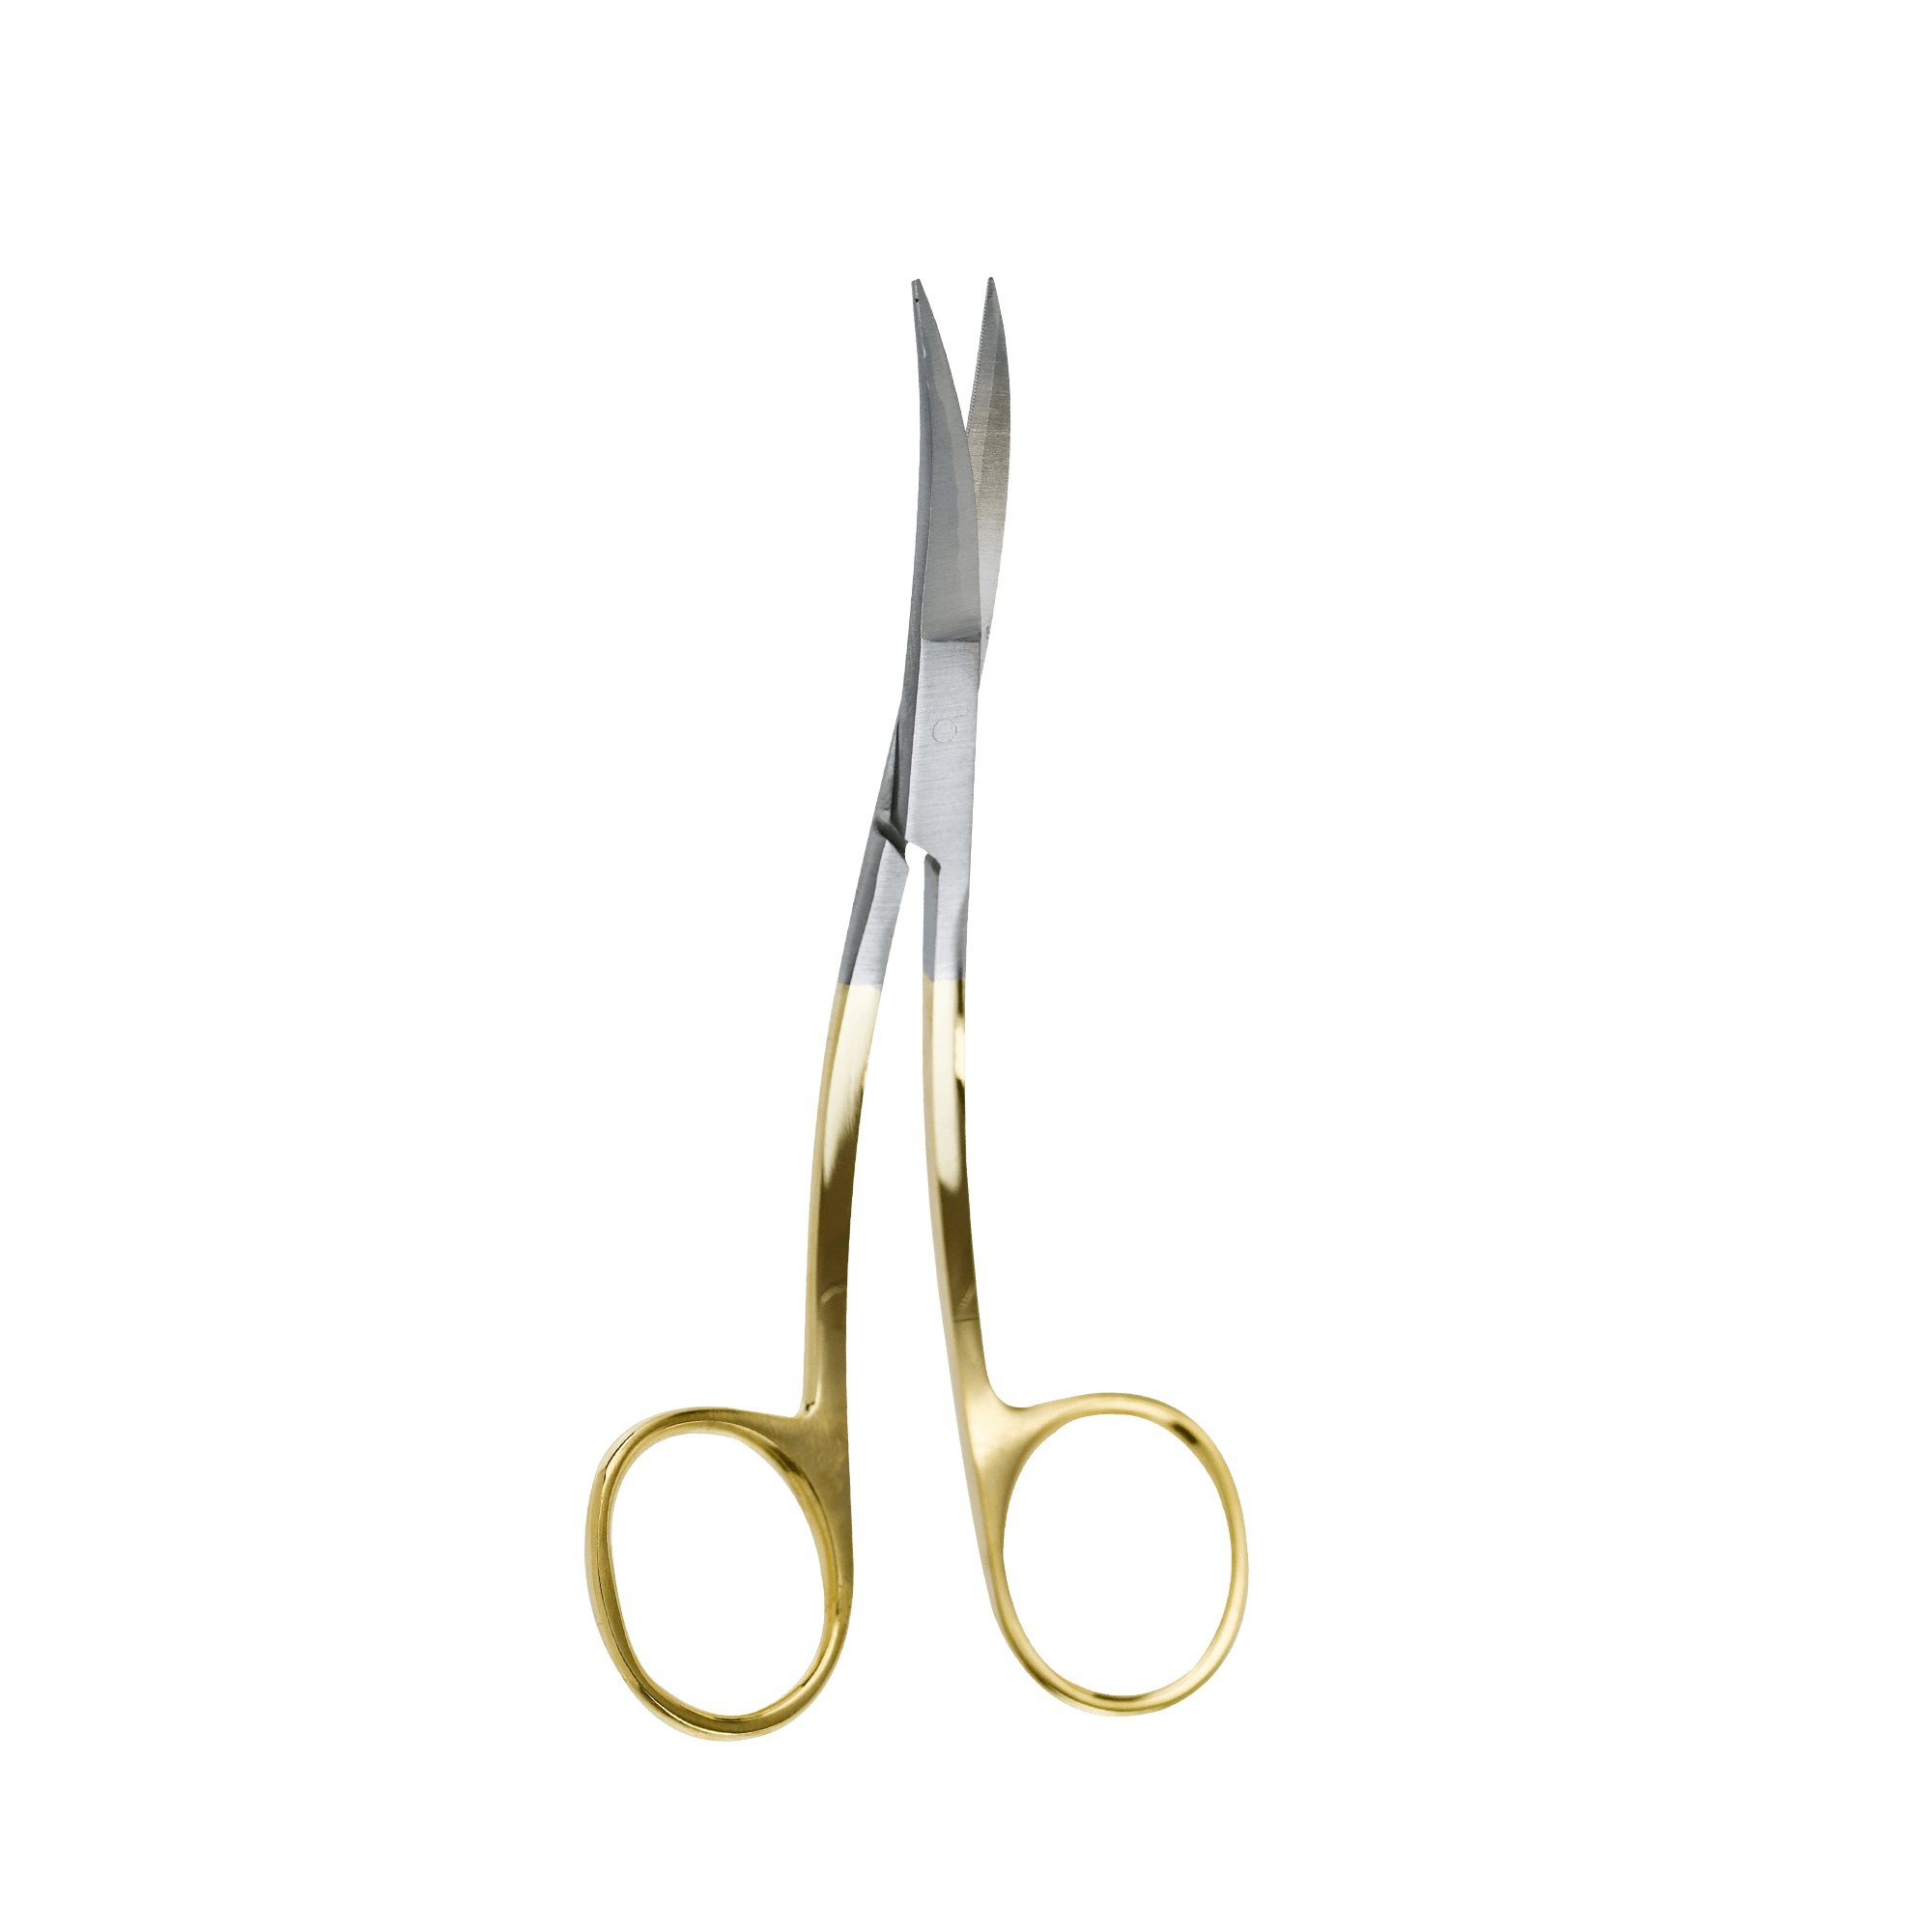 The Curve – ARC™ Scissors